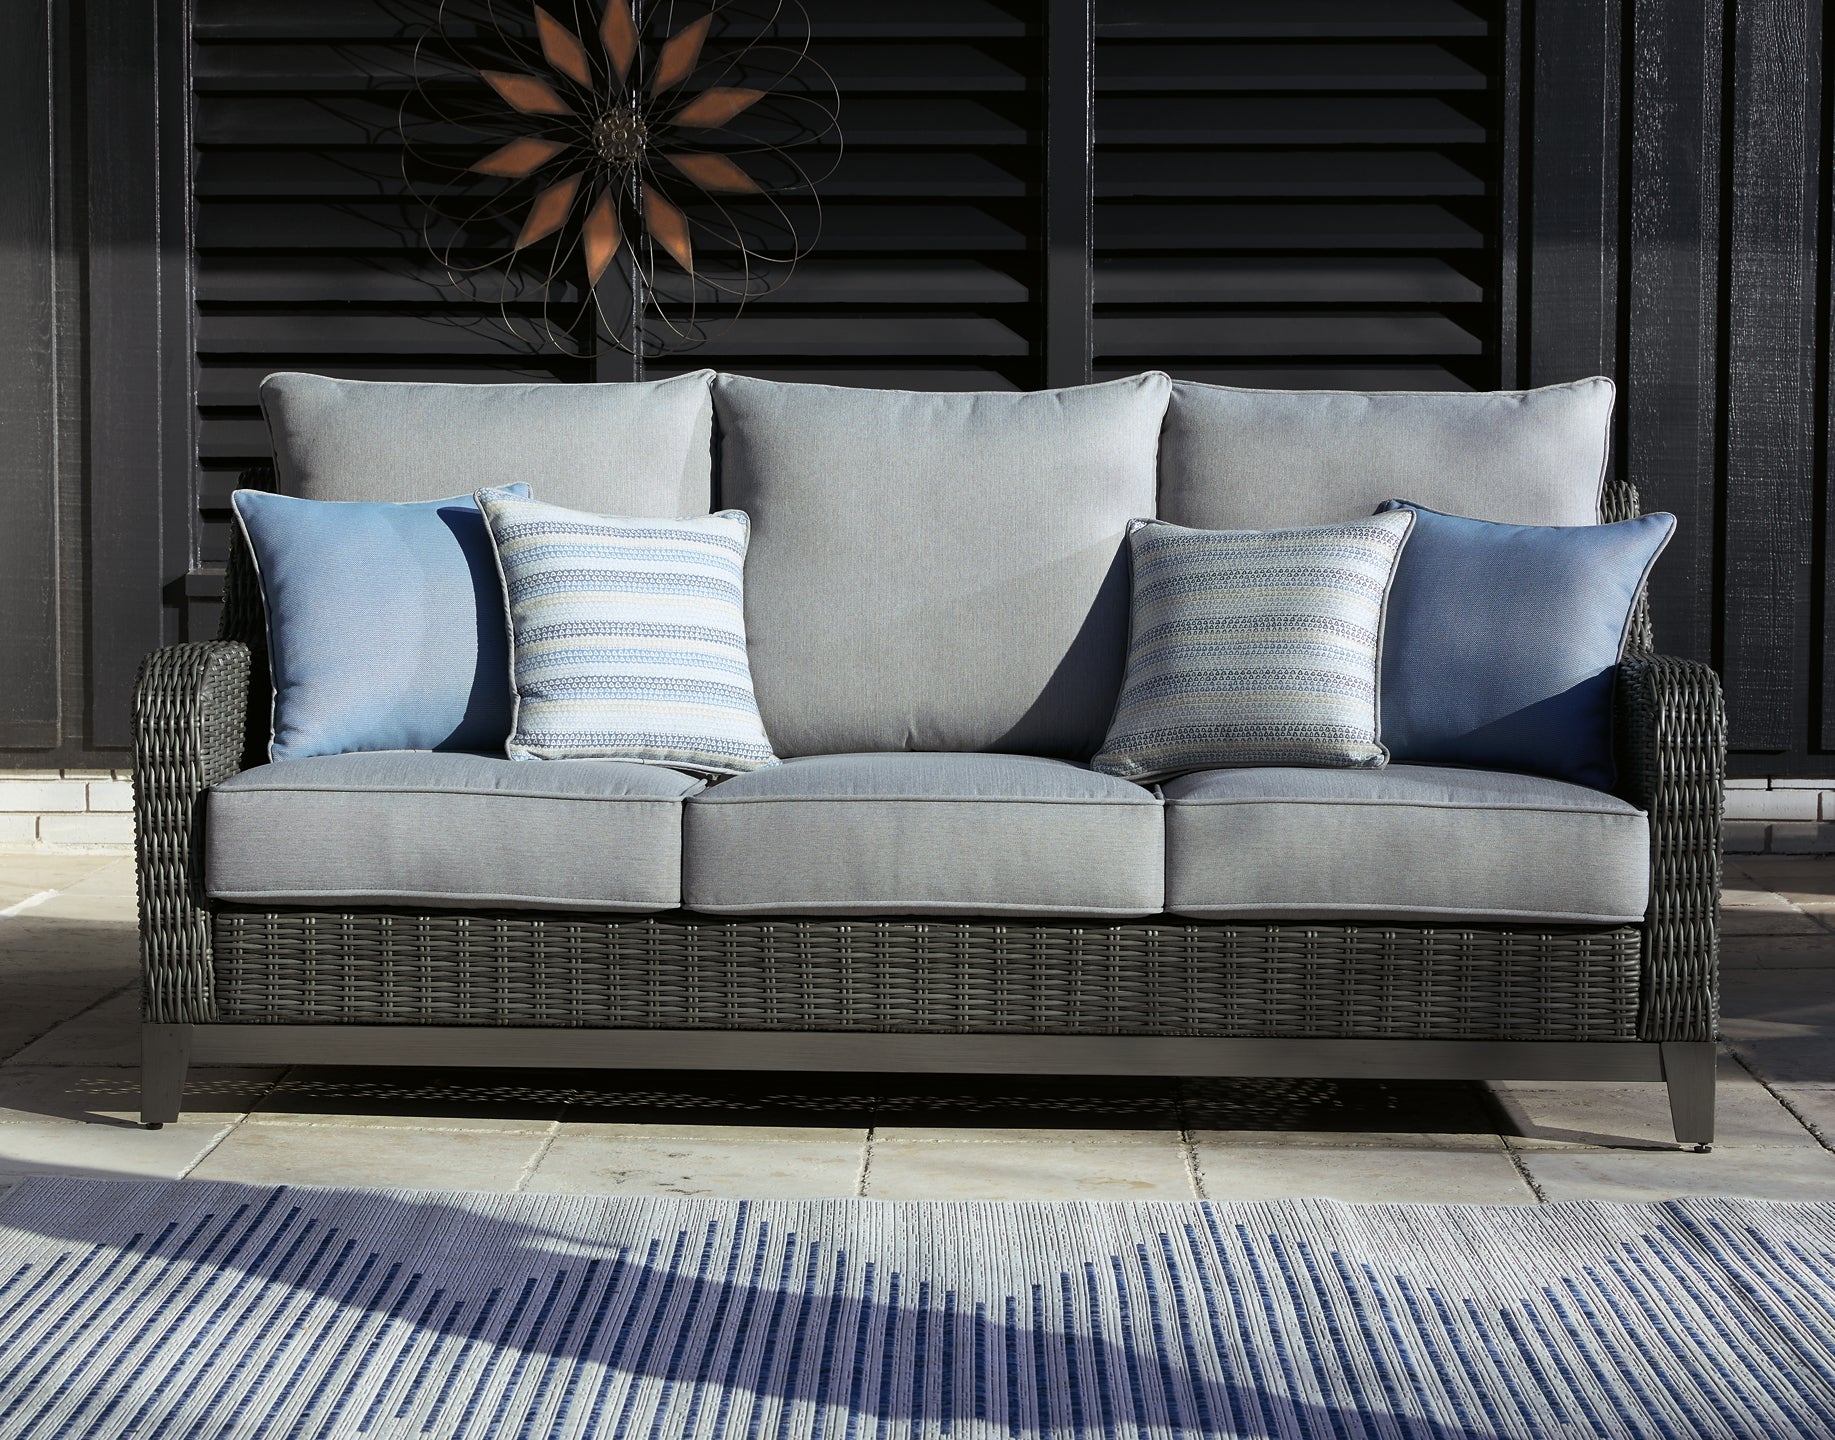 Elite Park Sofa with Cushion at Cloud 9 Mattress & Furniture furniture, home furnishing, home decor